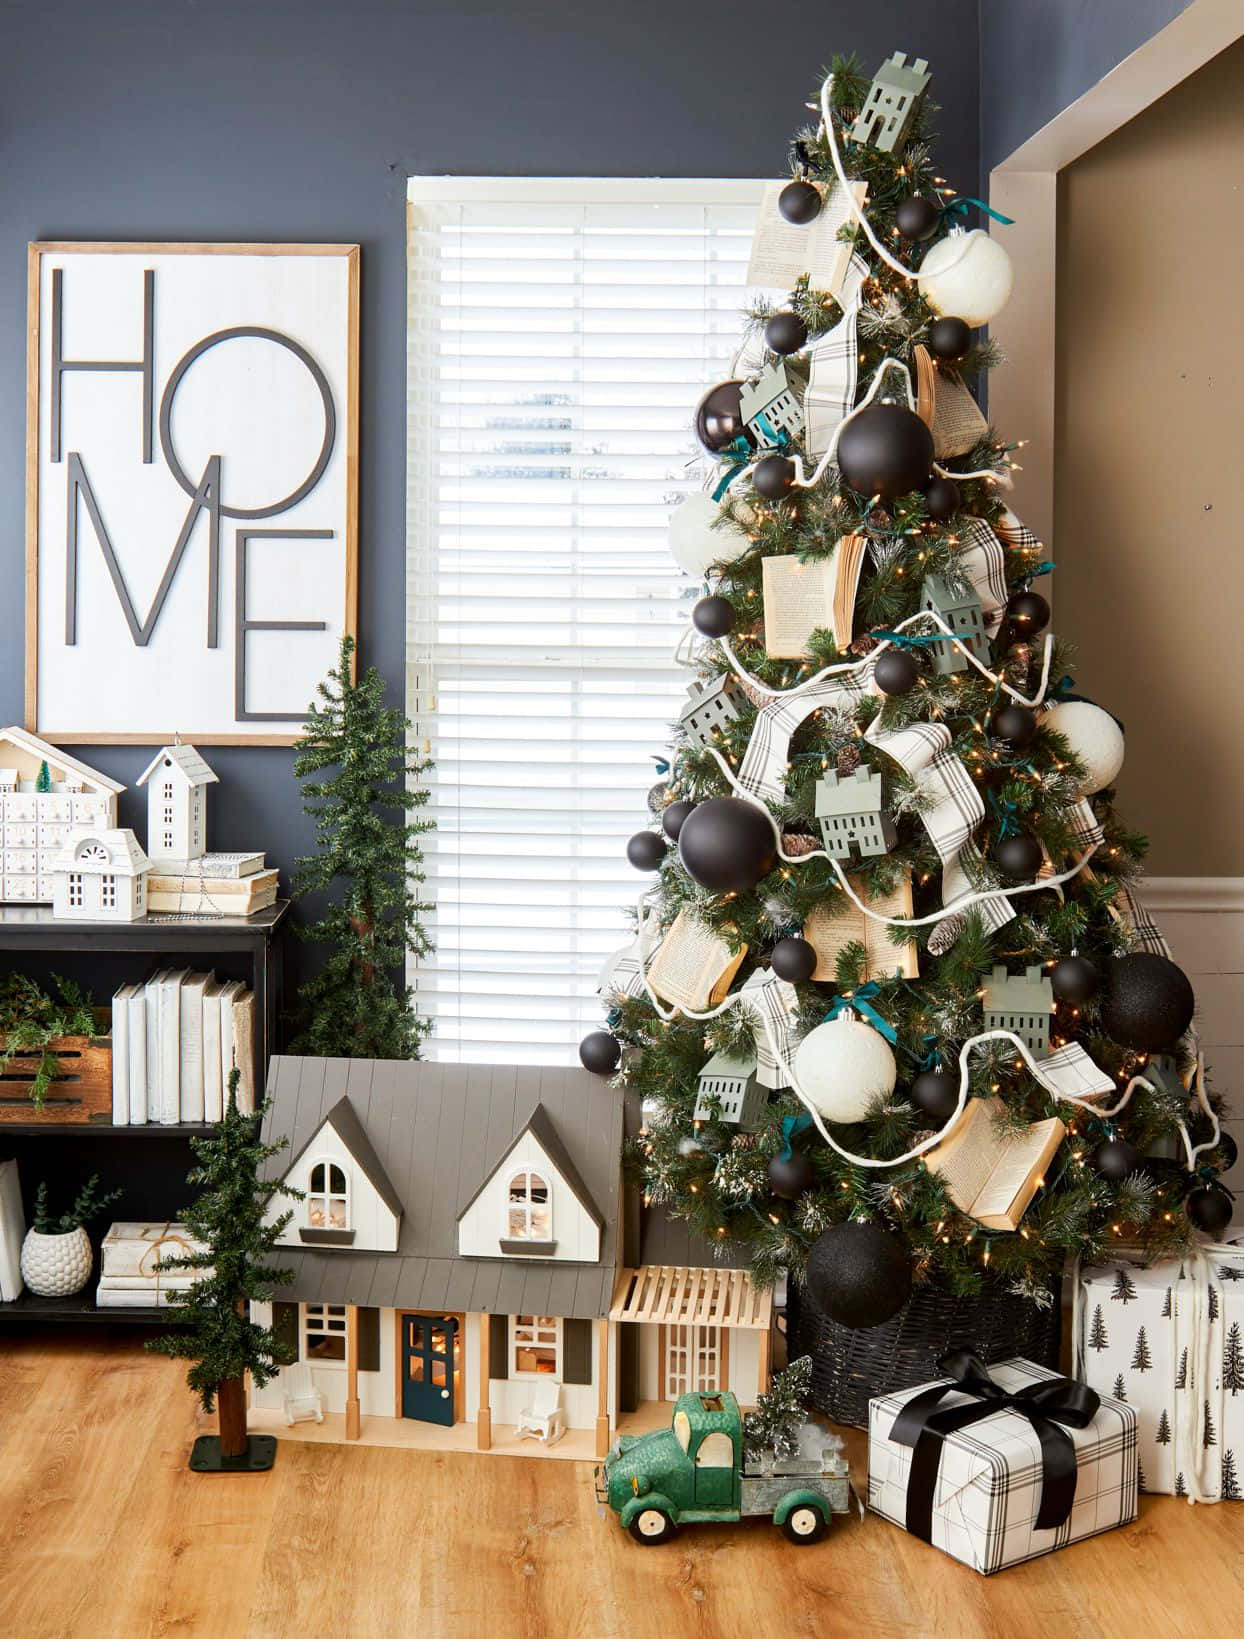 Enjoy the festivities of the holiday season with a Farmhouse Christmas. Wallpaper